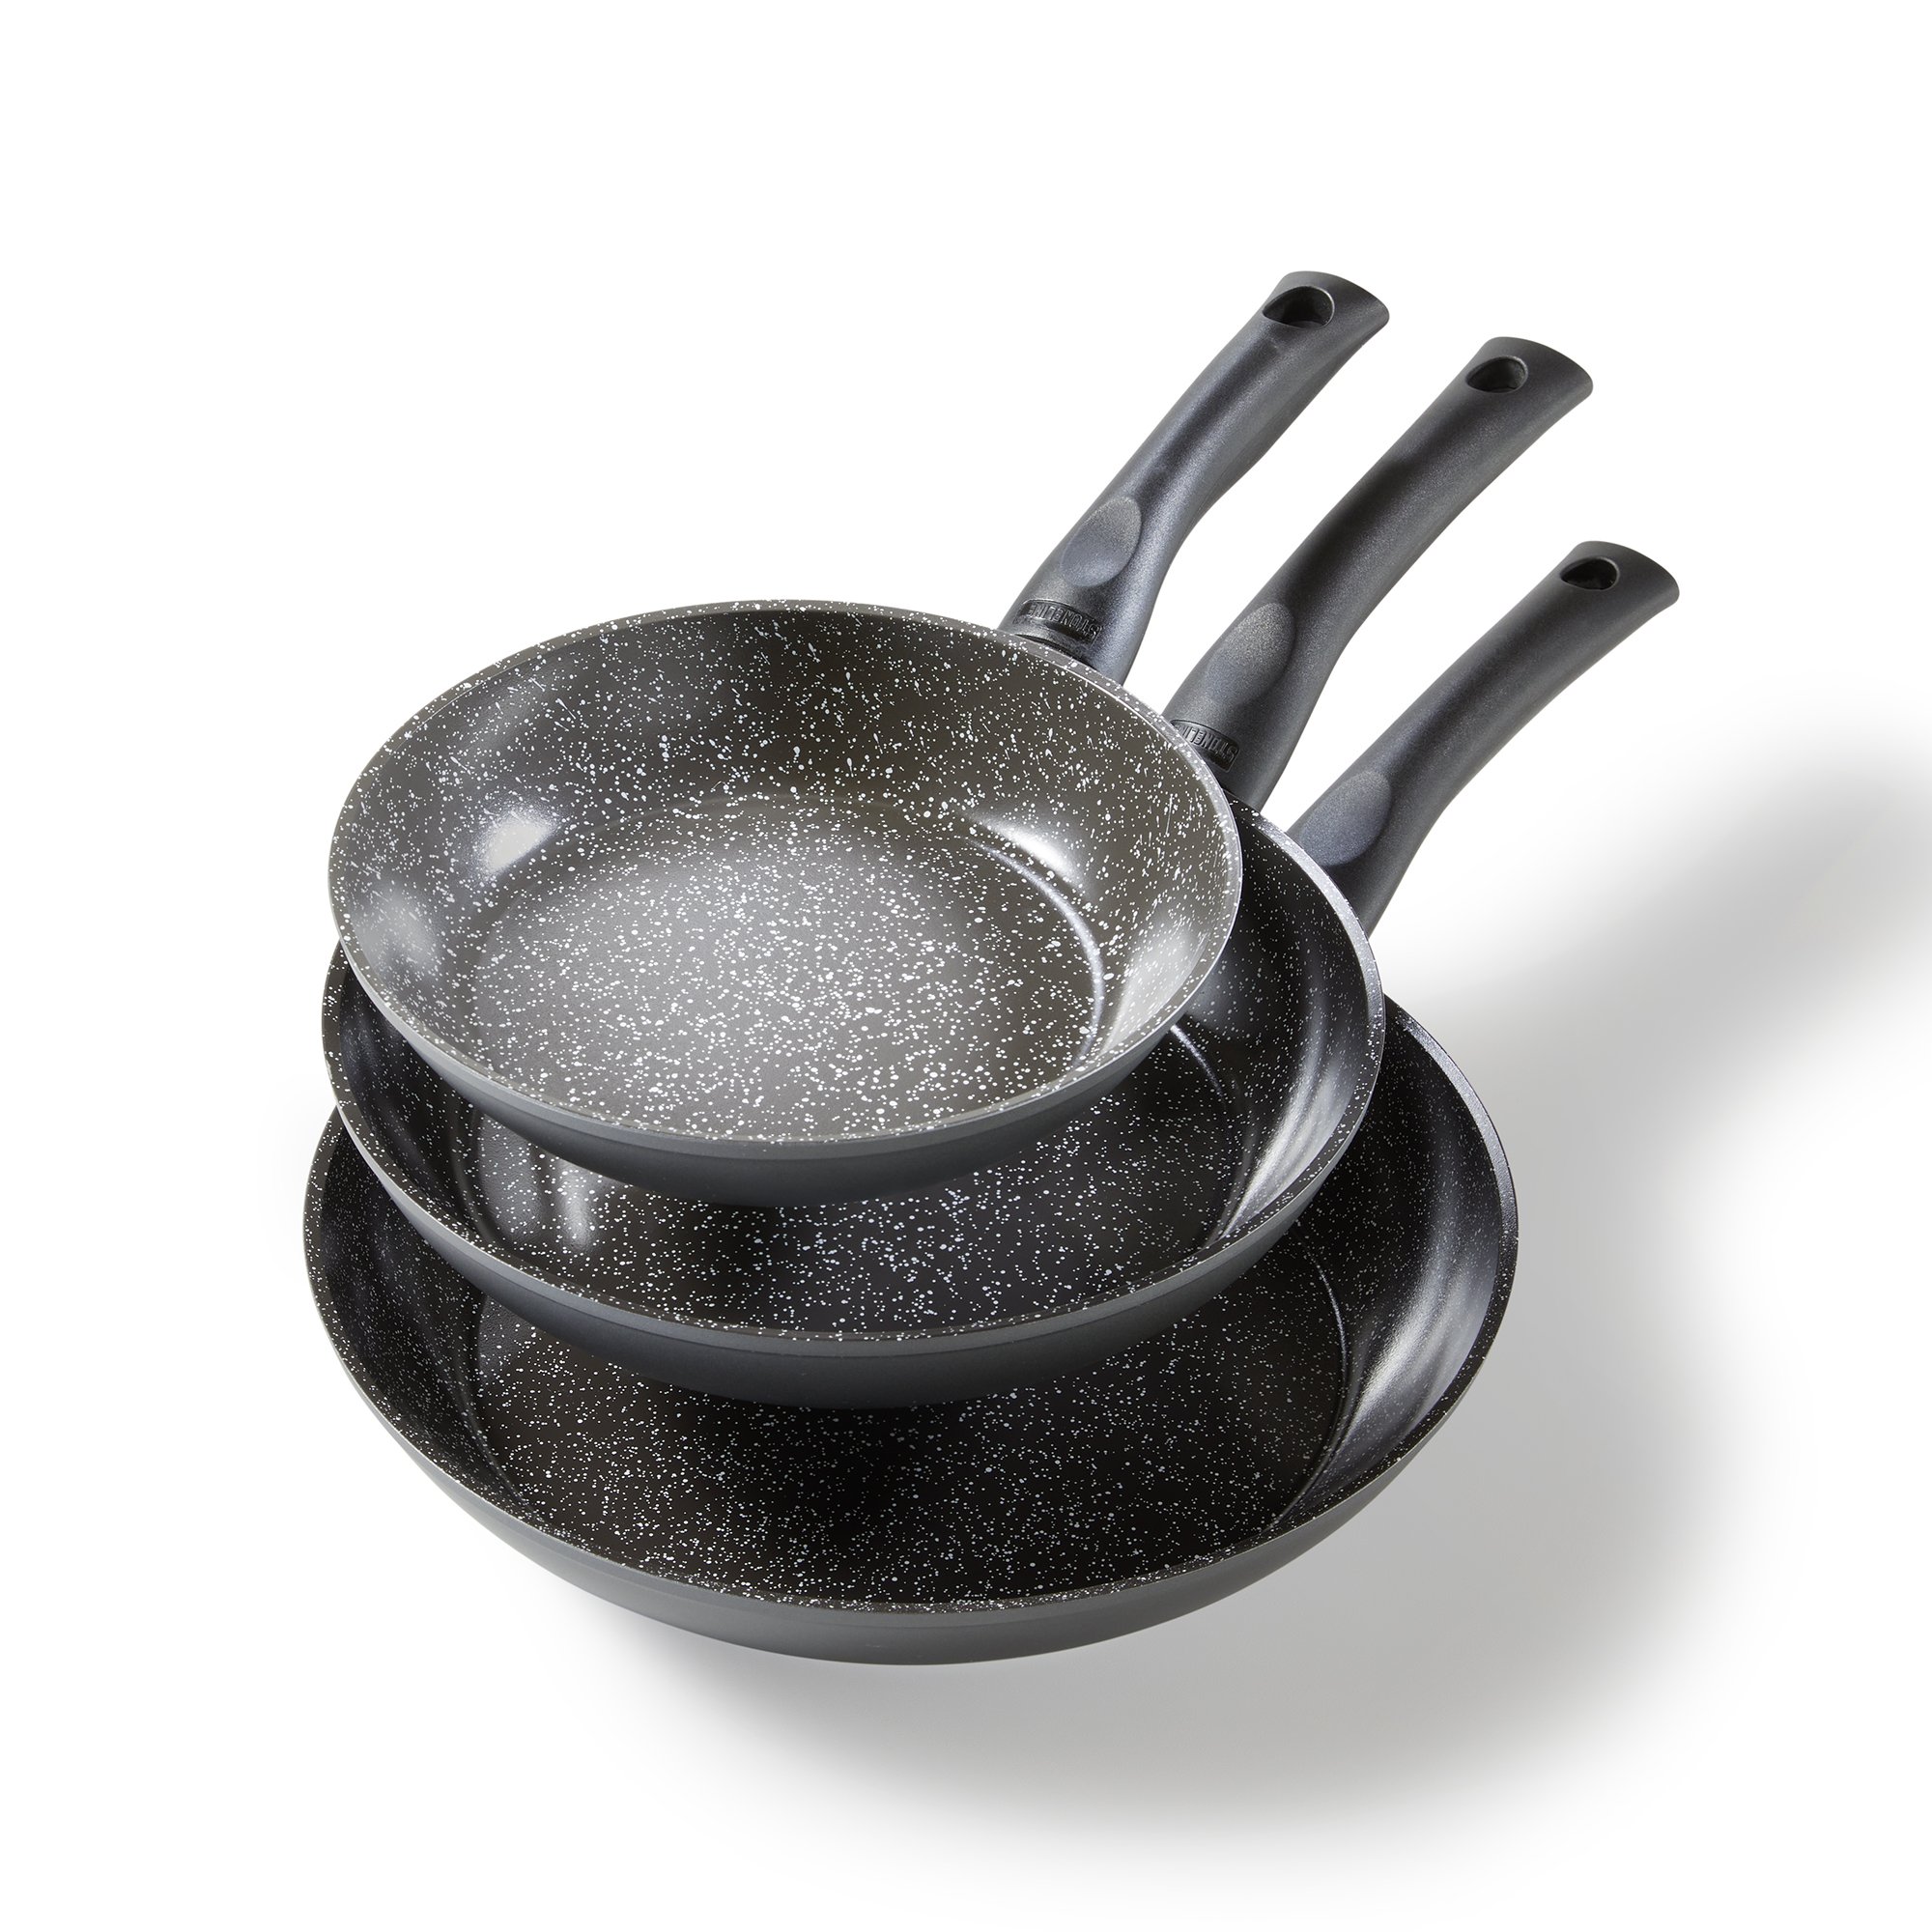 STONELINE® 3 pc CERAMIC Frying Pan Set 20/24/28 cm, Non-Stick Pan | CERAMIC Cookware